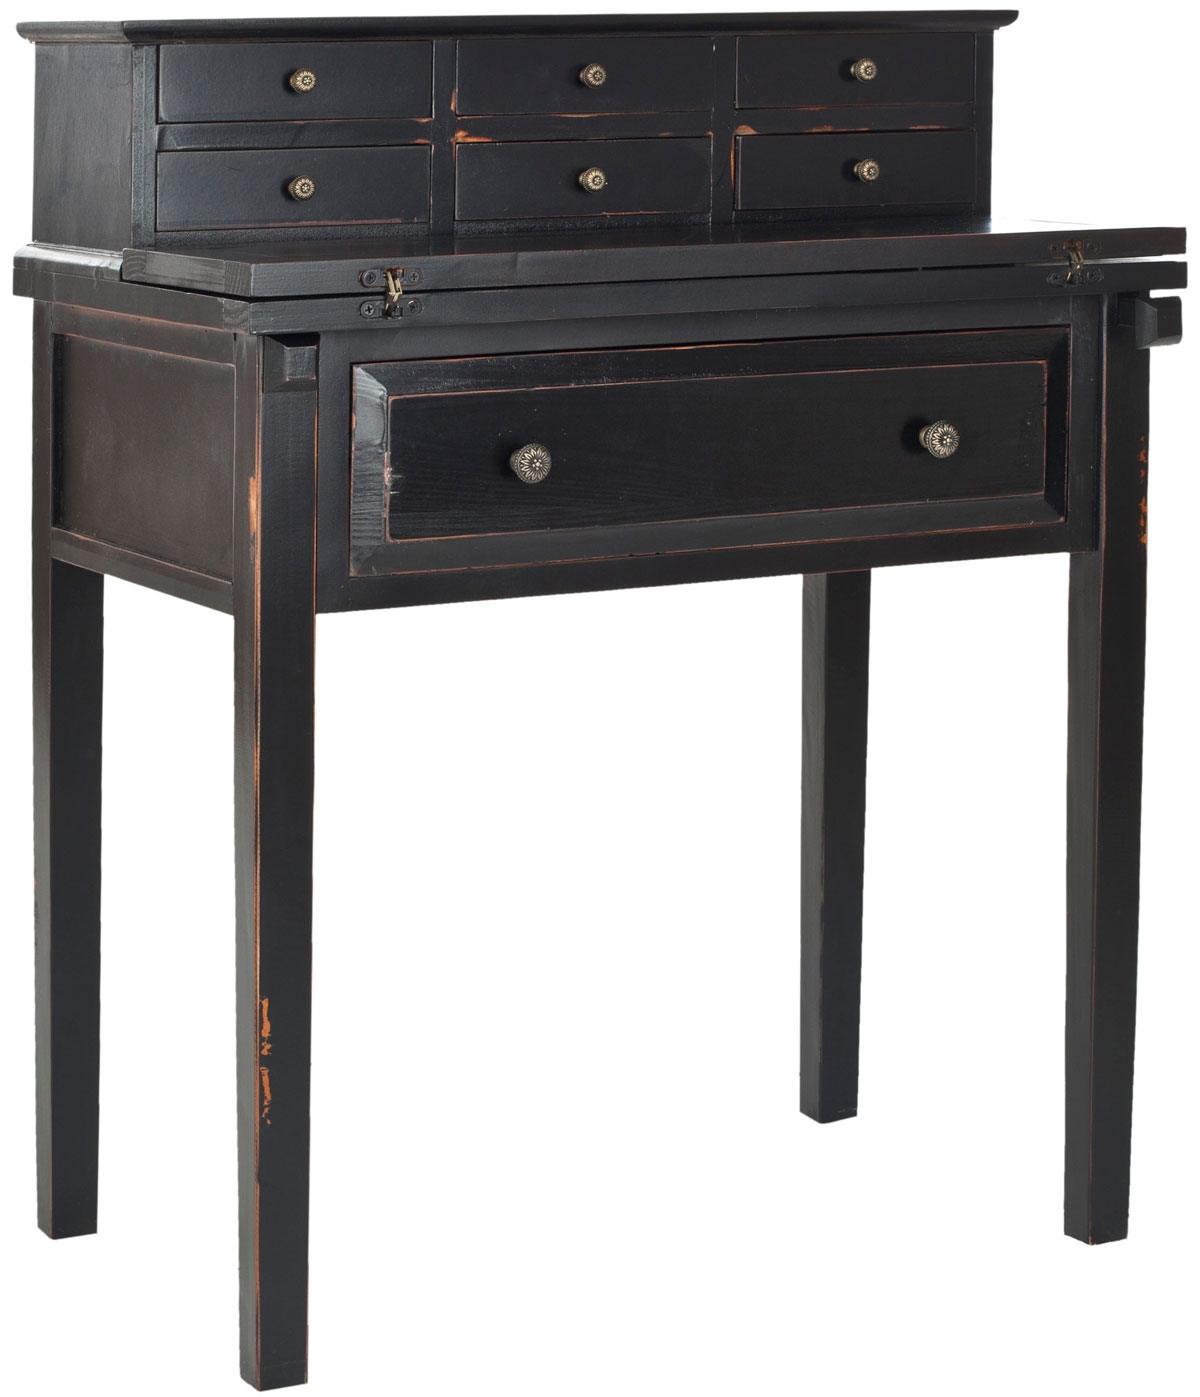 Abigail 7 Drawer Fold Down Desk - Distressed Black - Arlo Home - Image 2